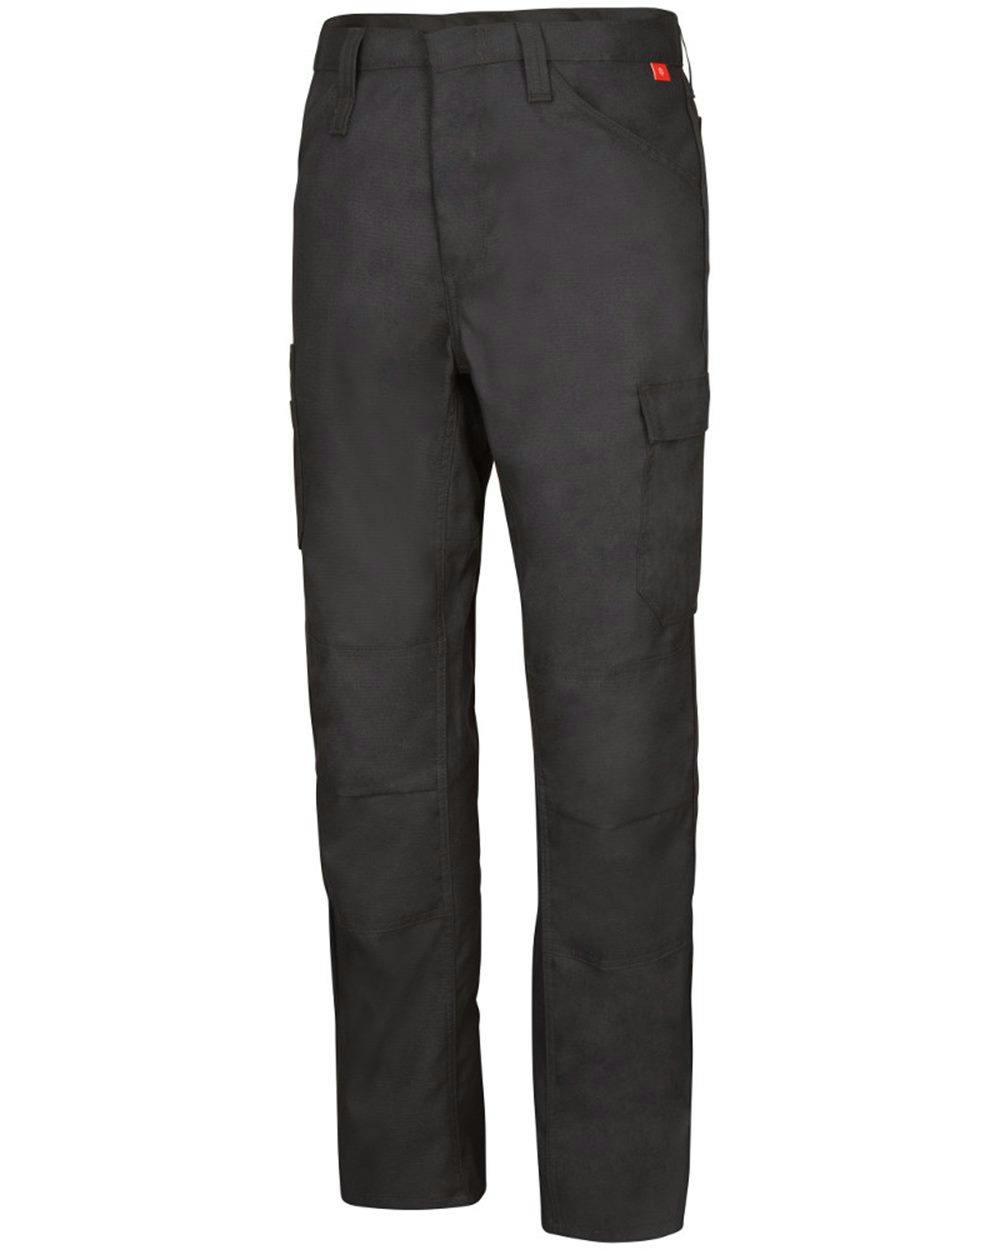 Image for iQ Comfort Lightweight Pants - QP14